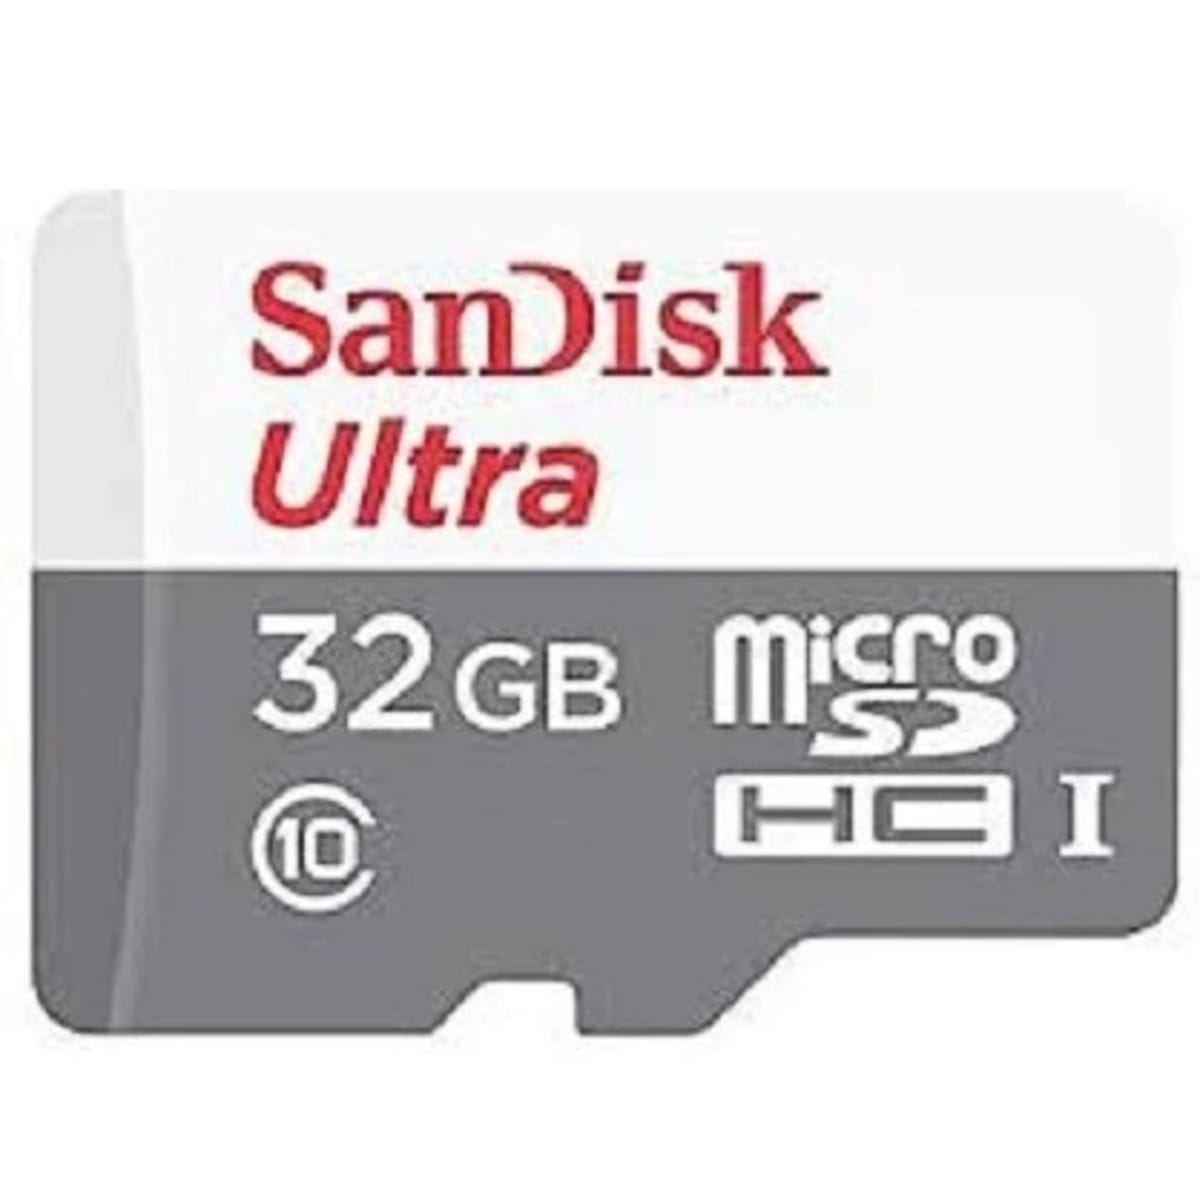 SanDisk Ultra Micro Sd Card 32GB 100MB - s Class 10